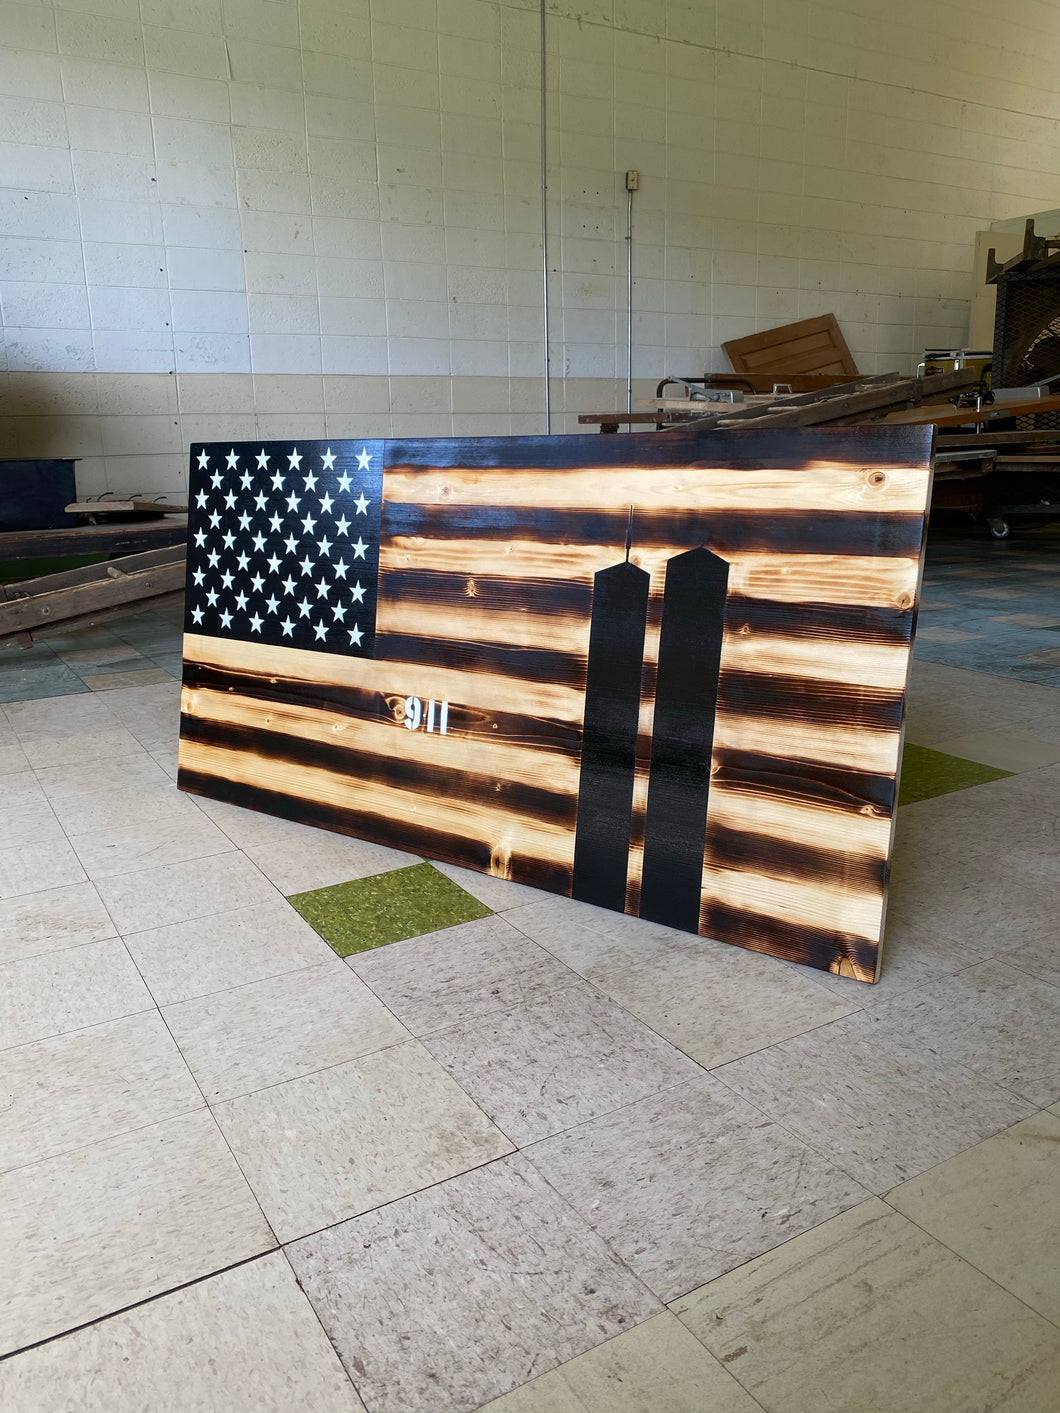 9/11 Memorial Flag Charred - Small